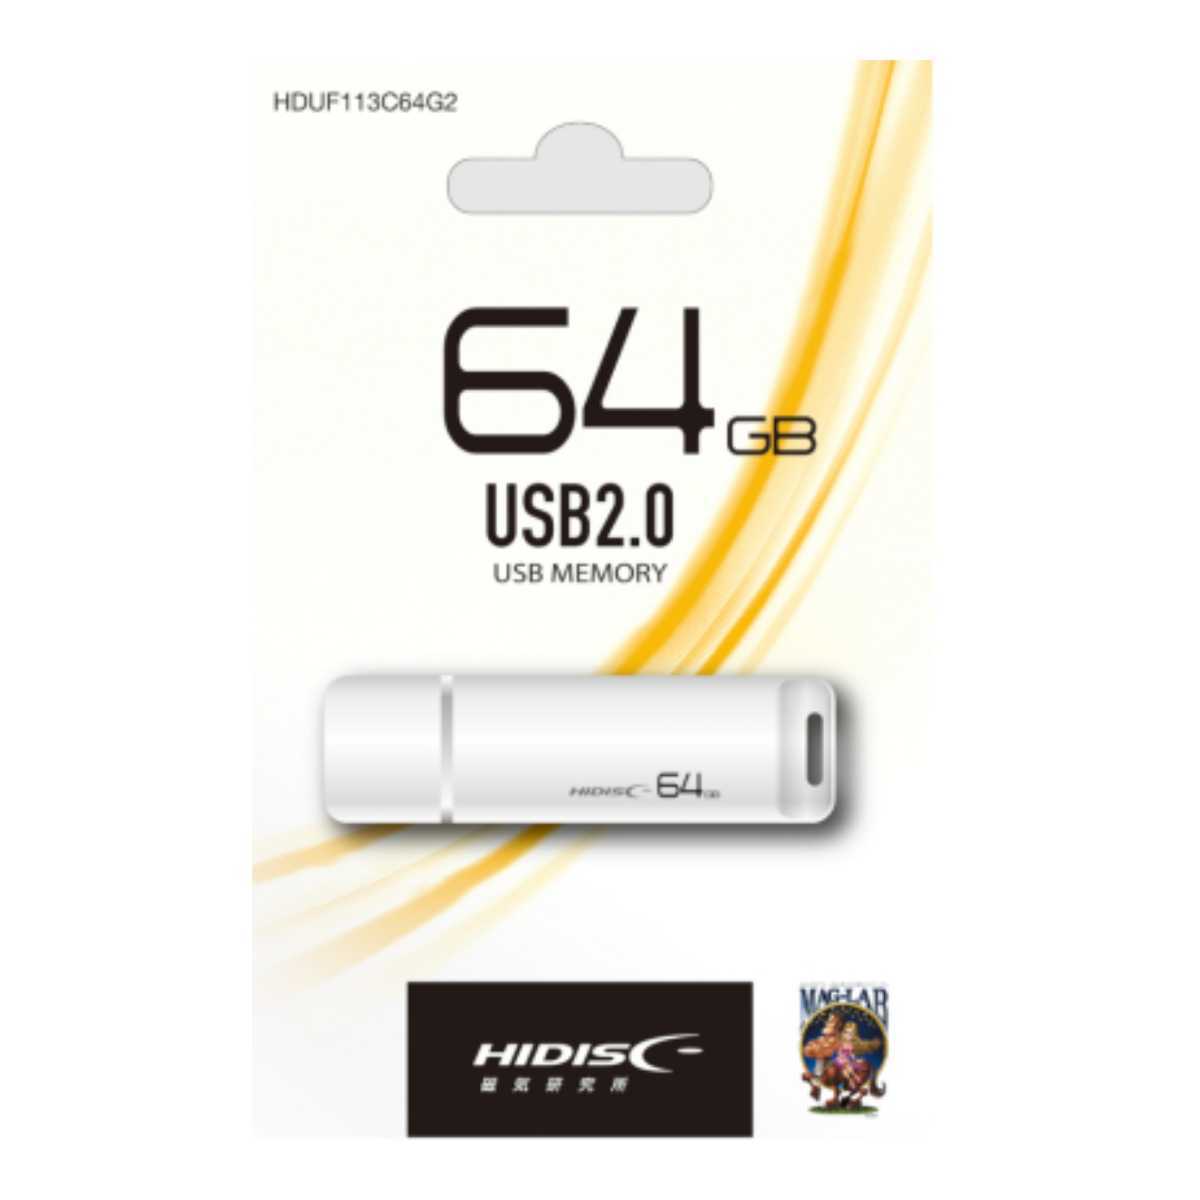 USBフラッシュメモリー 64GB (HI-DISC）HDUF113C64G2 二個セット 【1円スタート出品・新品・送料無料】の画像2